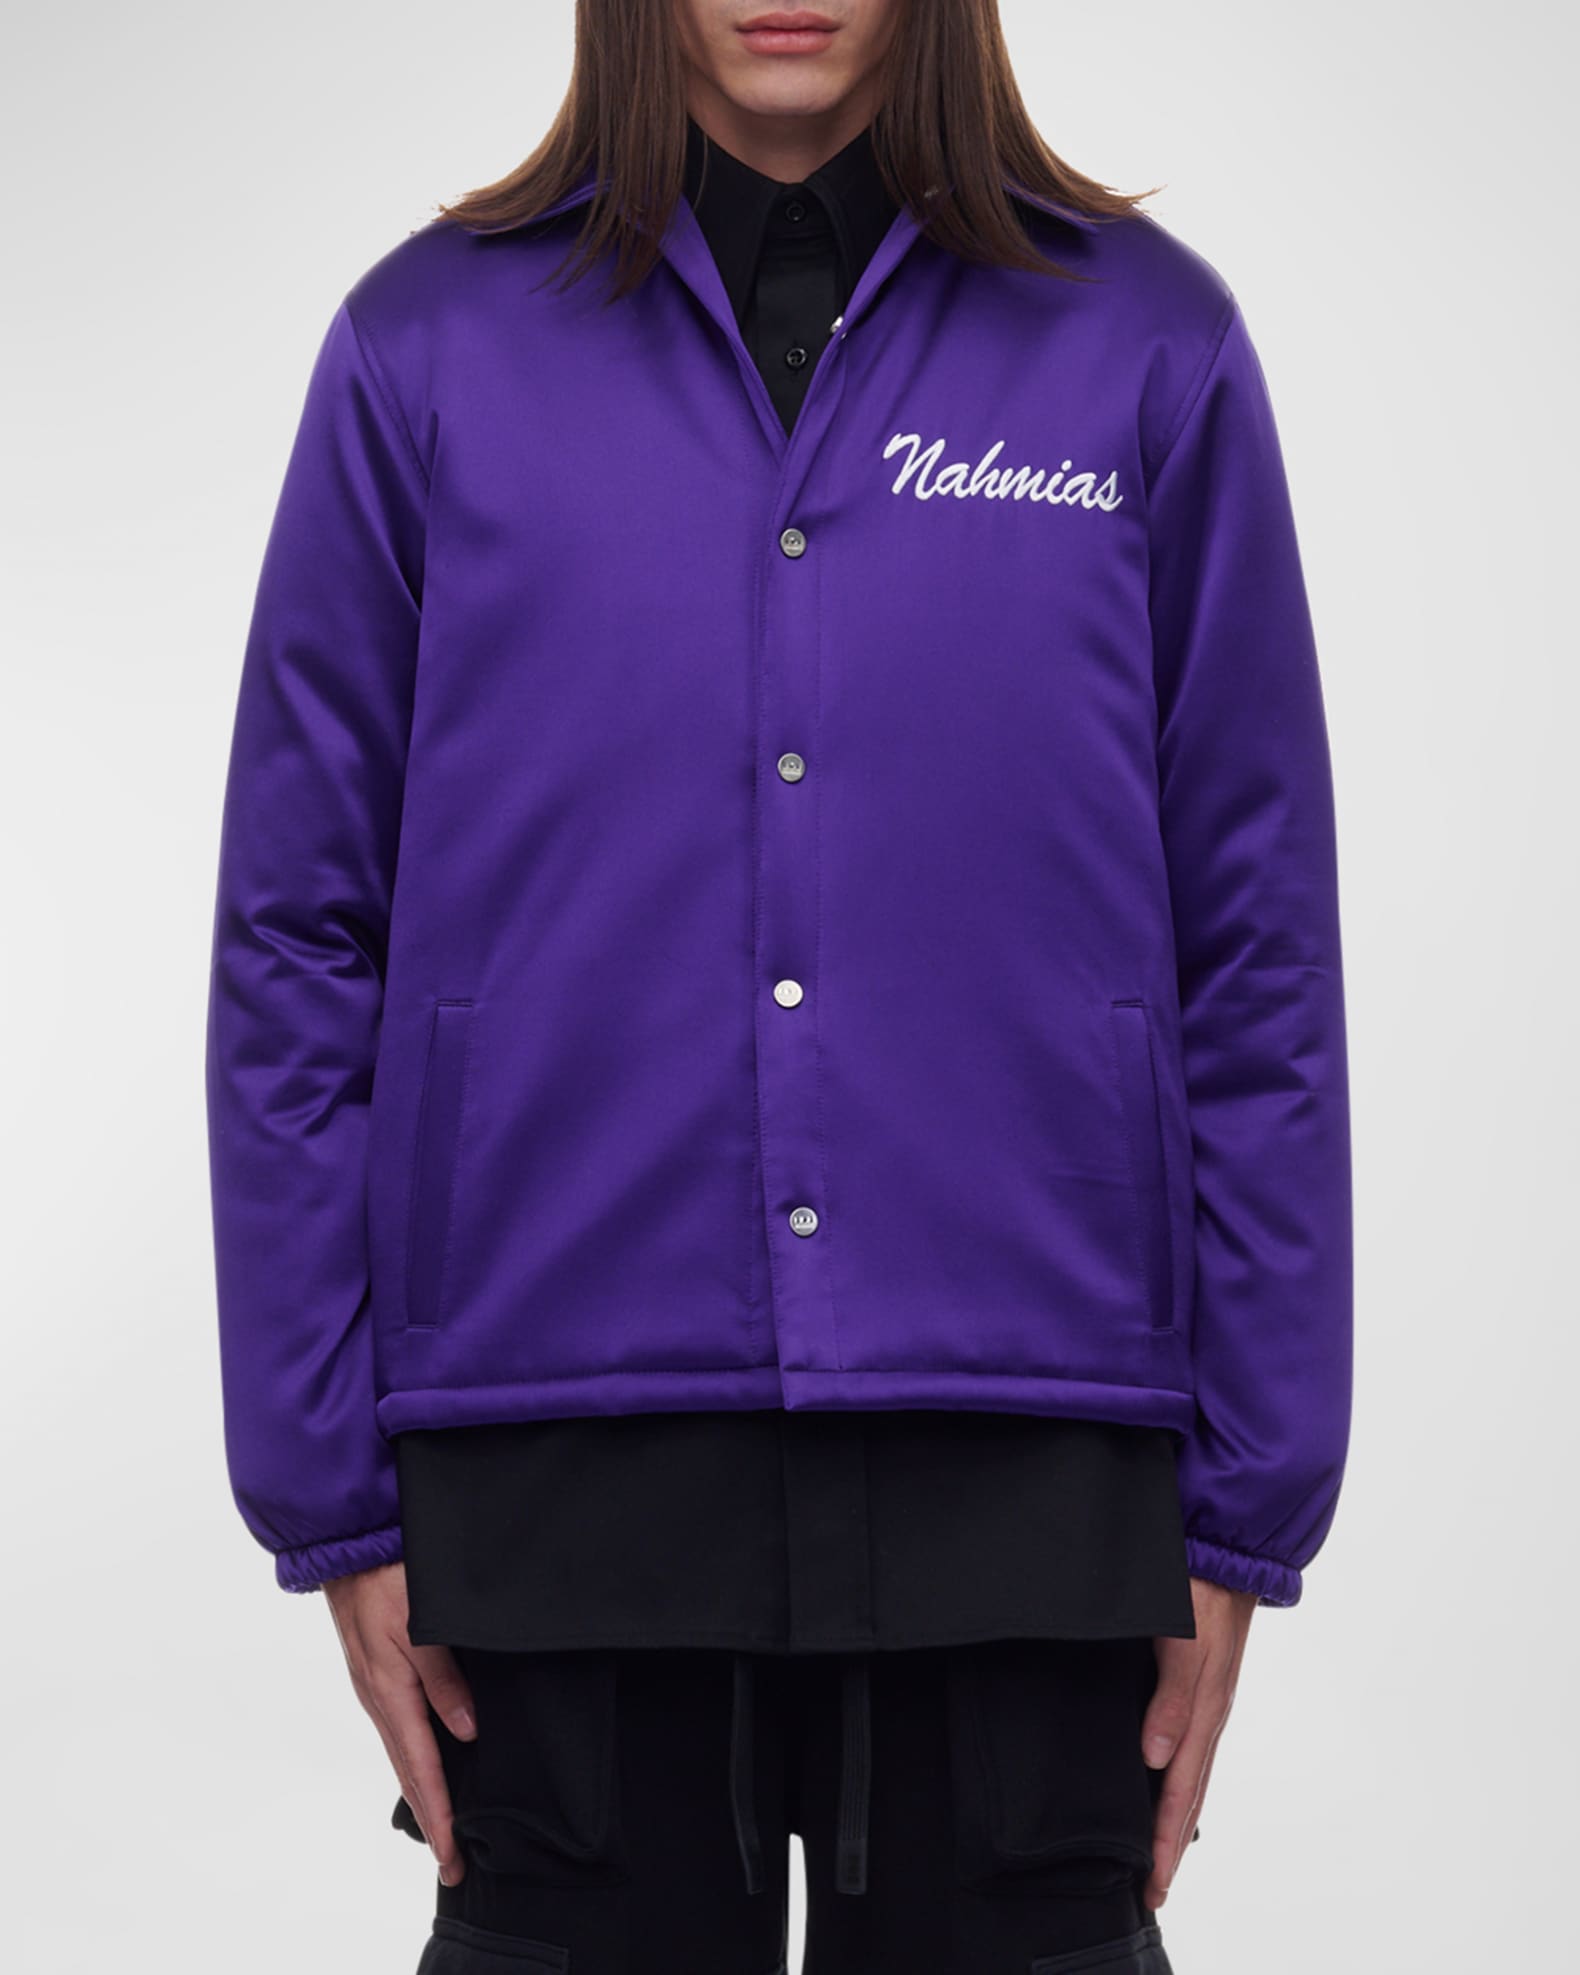 NAHMIAS Men's Miracle Academy Embroidered Silk Coach Jacket